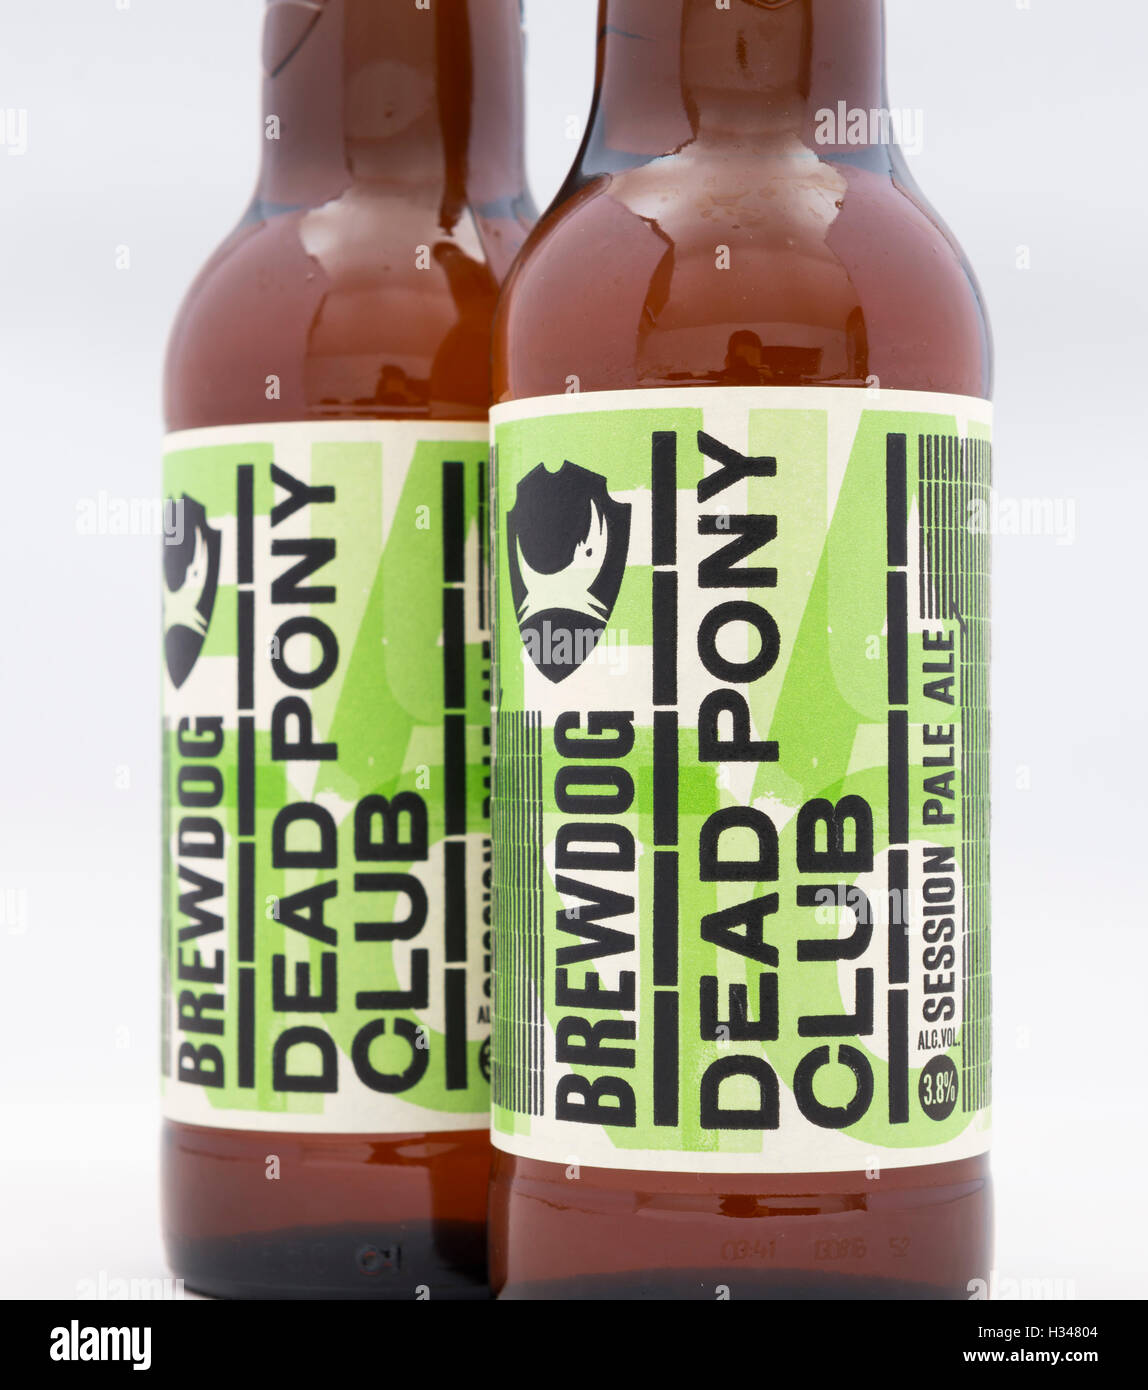 2 bottles of BrewDog 'Dead Pony Club' craft beer. Stock Photo